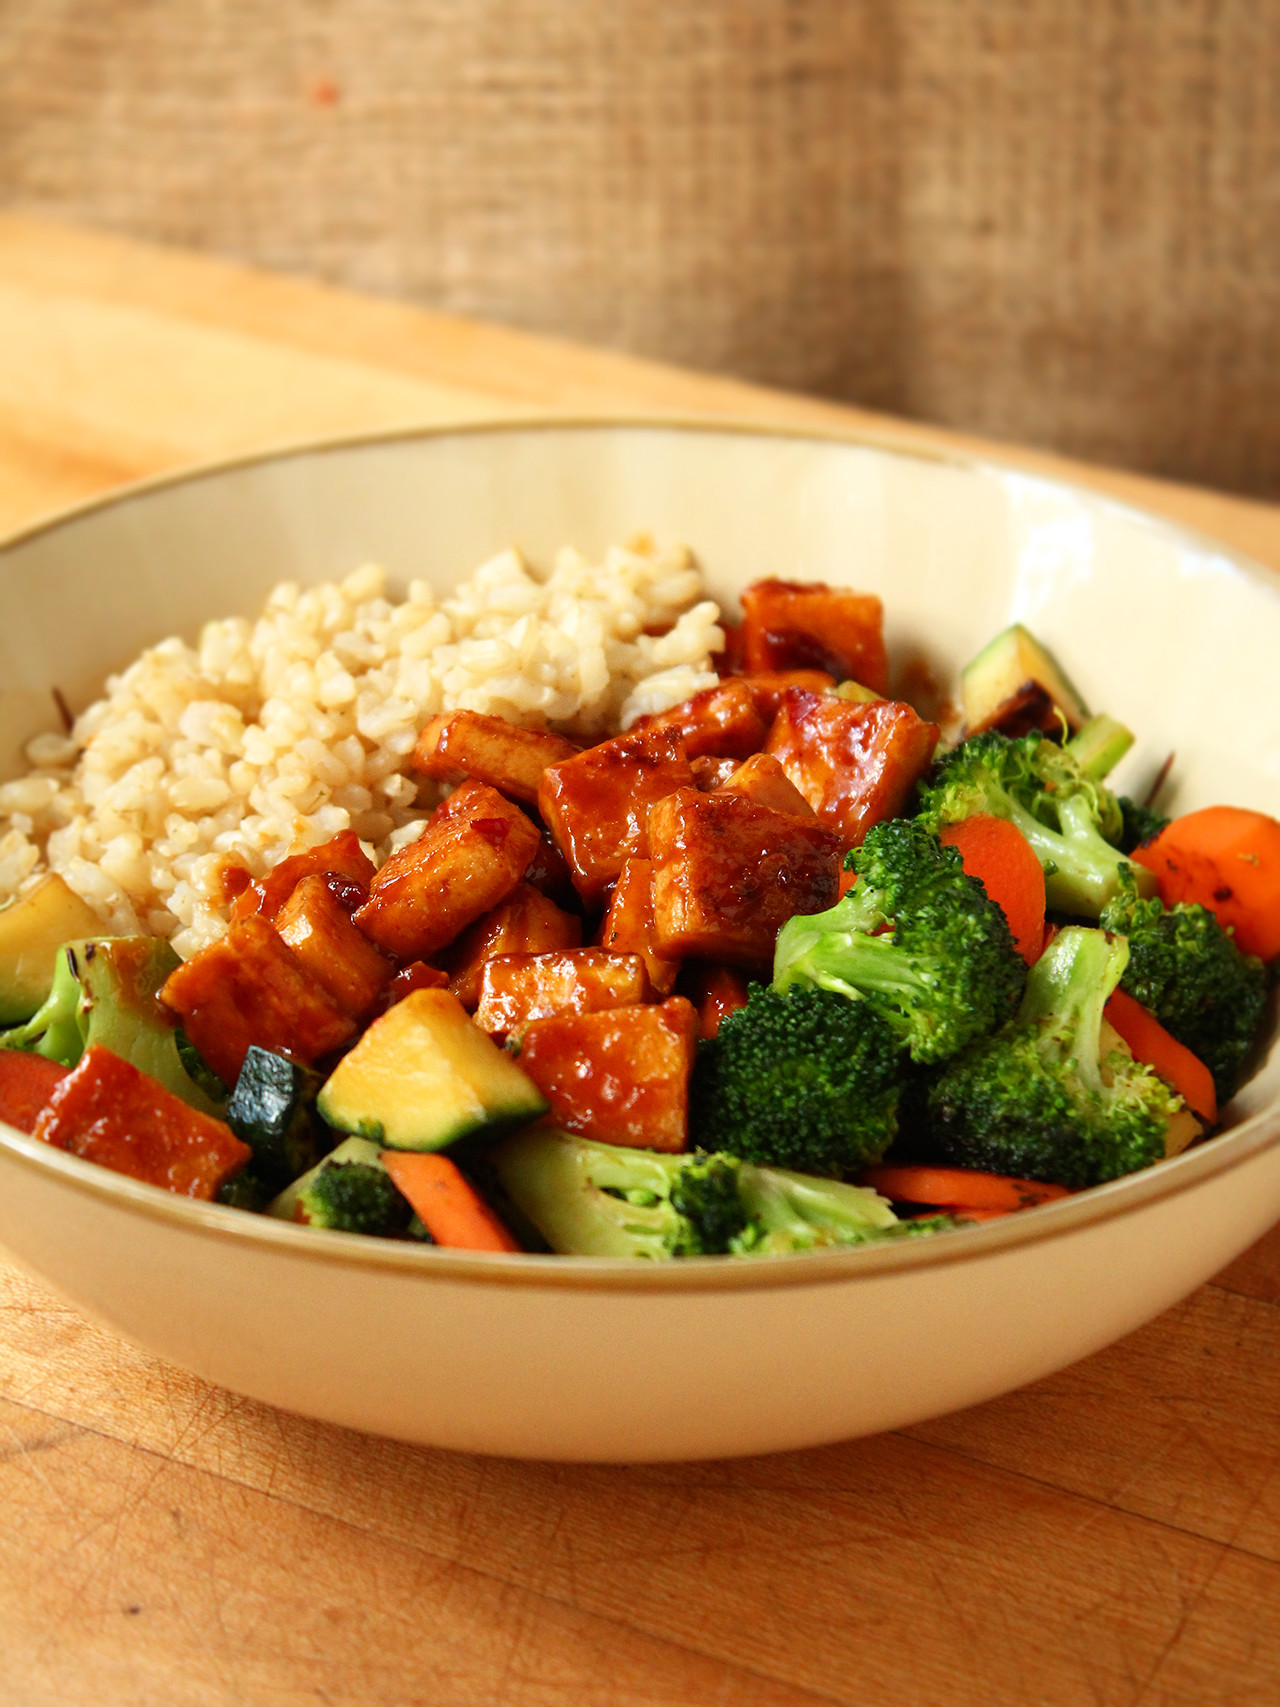 Vegan Tofu Recipes For Dinner
 Teriyaki Peanut Tofu with Stir Fried Veggies & Brown Rice